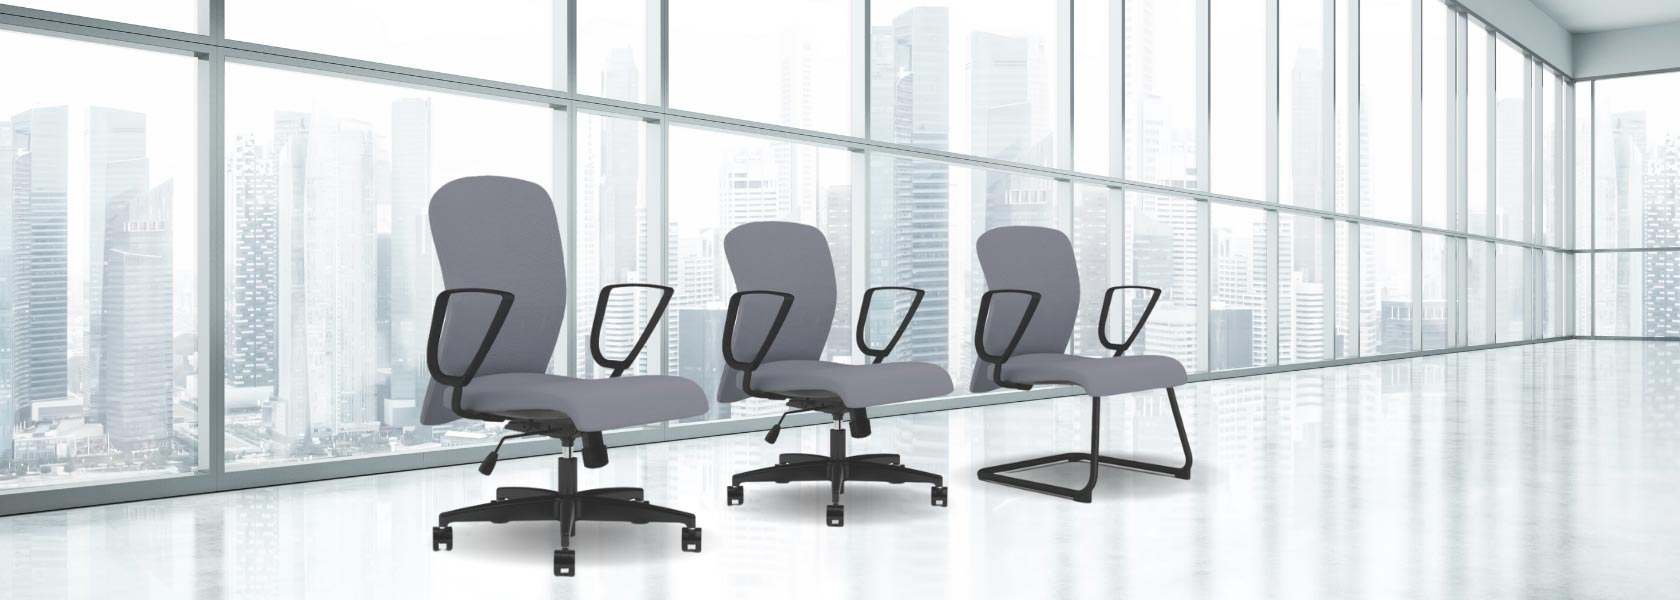 Taz chairs in grey fabrics on an office floor